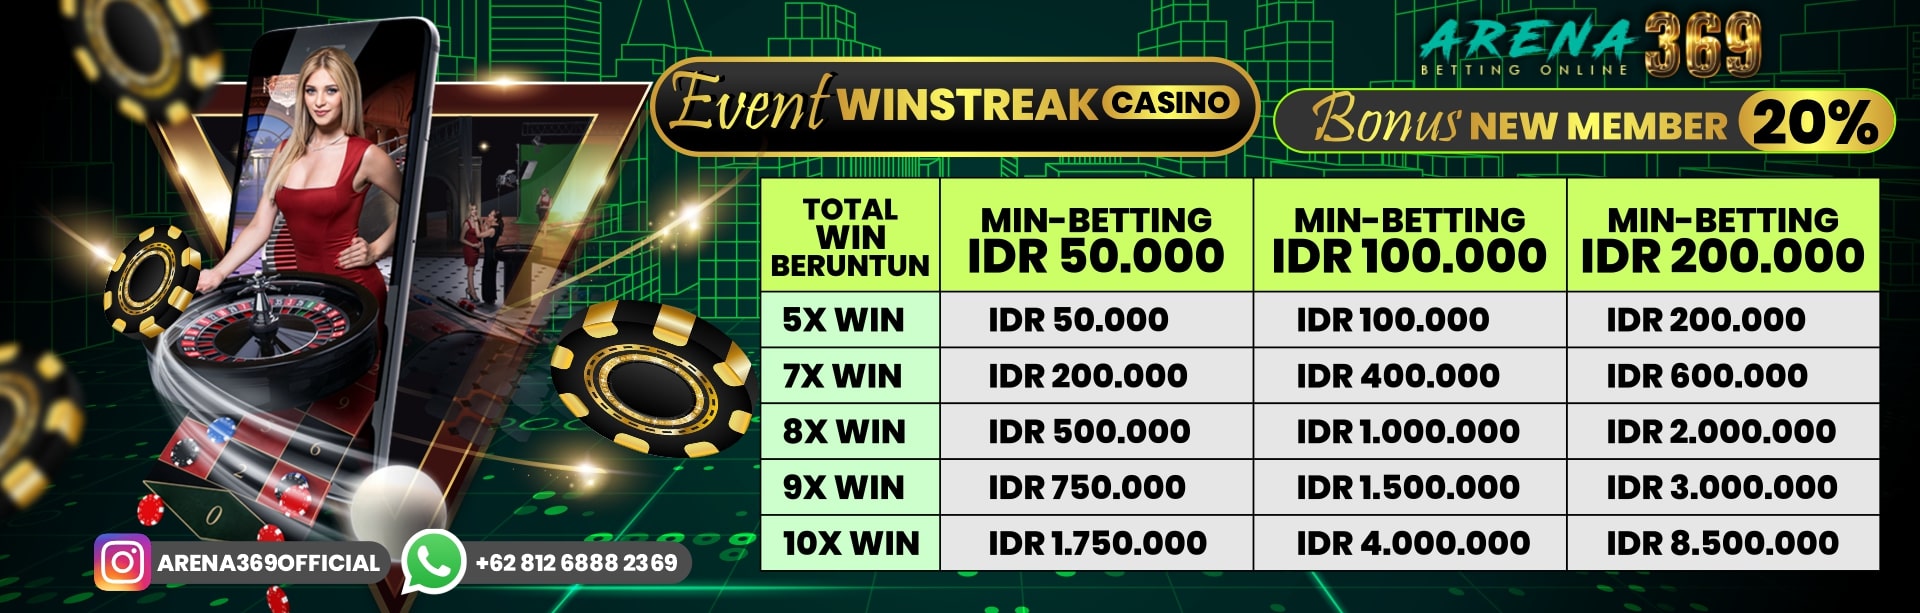 Event Win Streak casino & Bonus New Member 20%